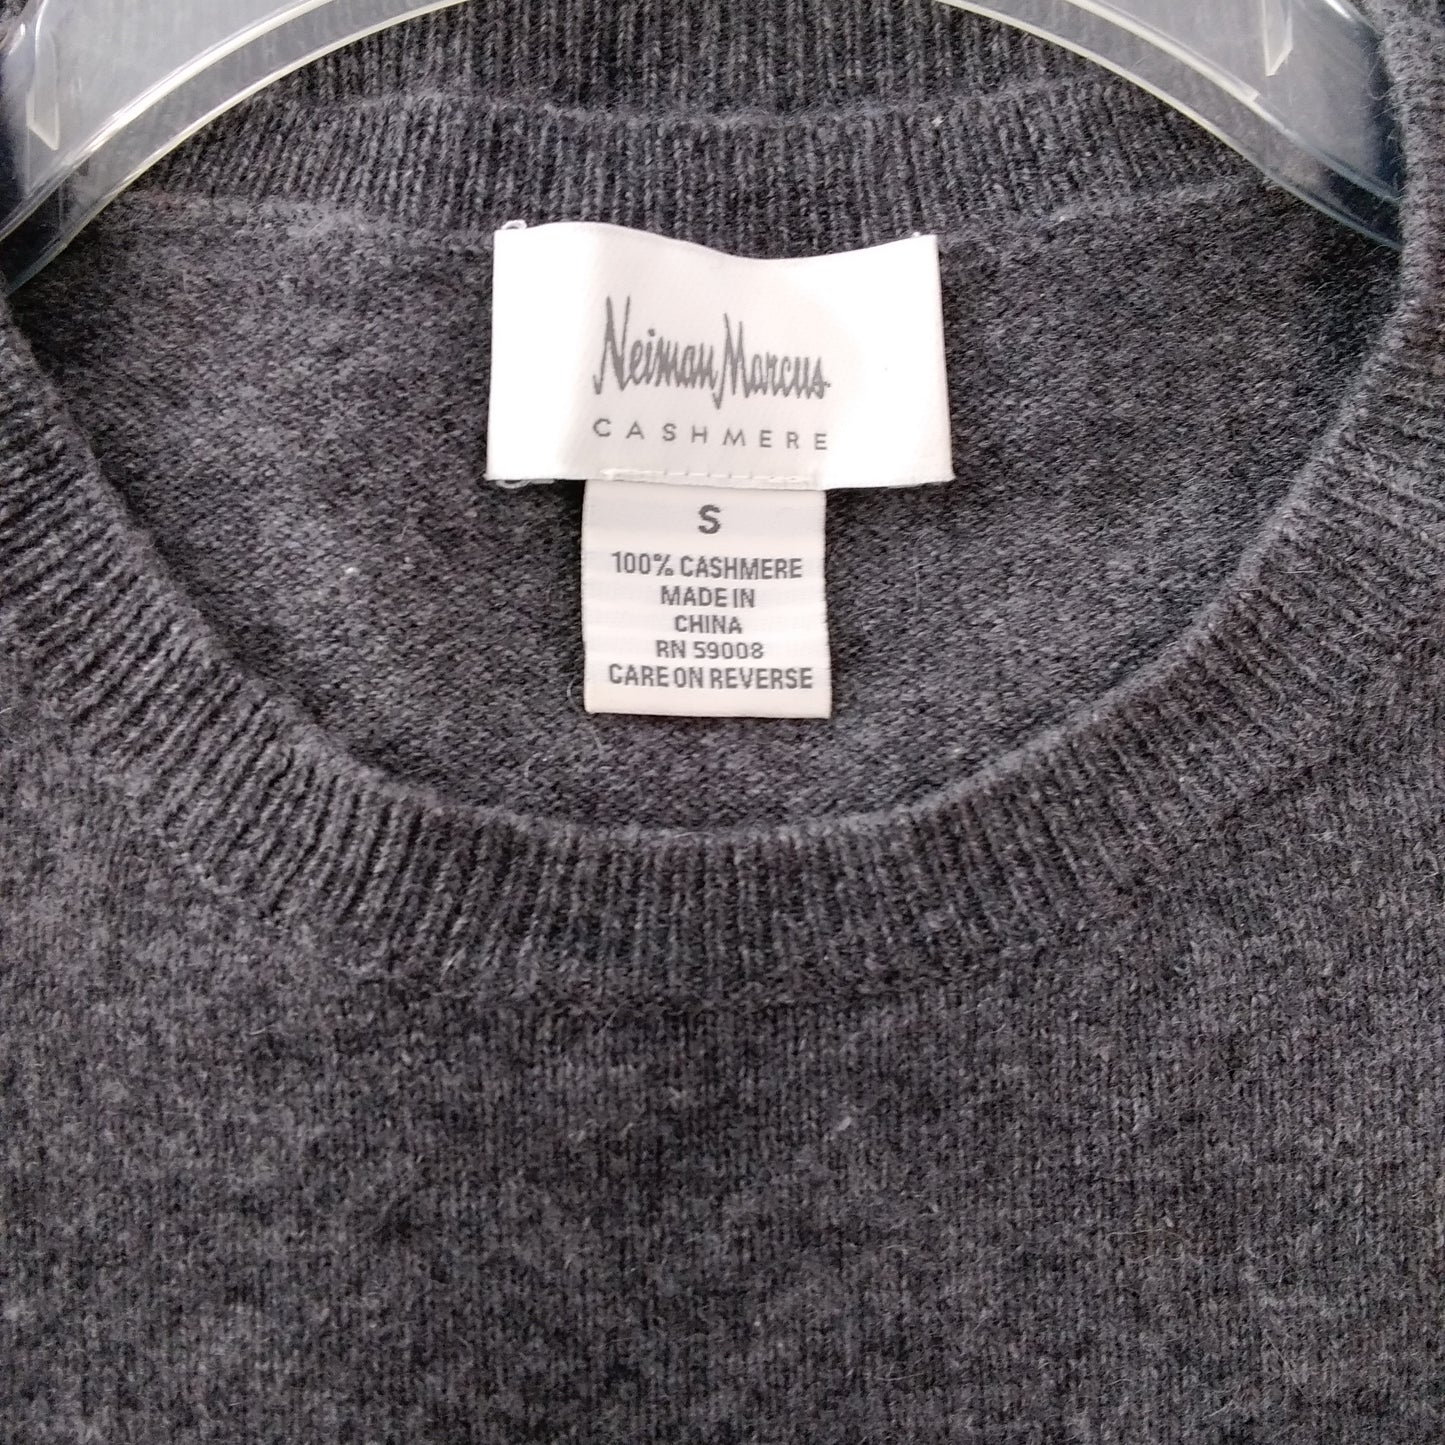 Neiman Marcus Cashmere Gray Cashmere Sweater - S